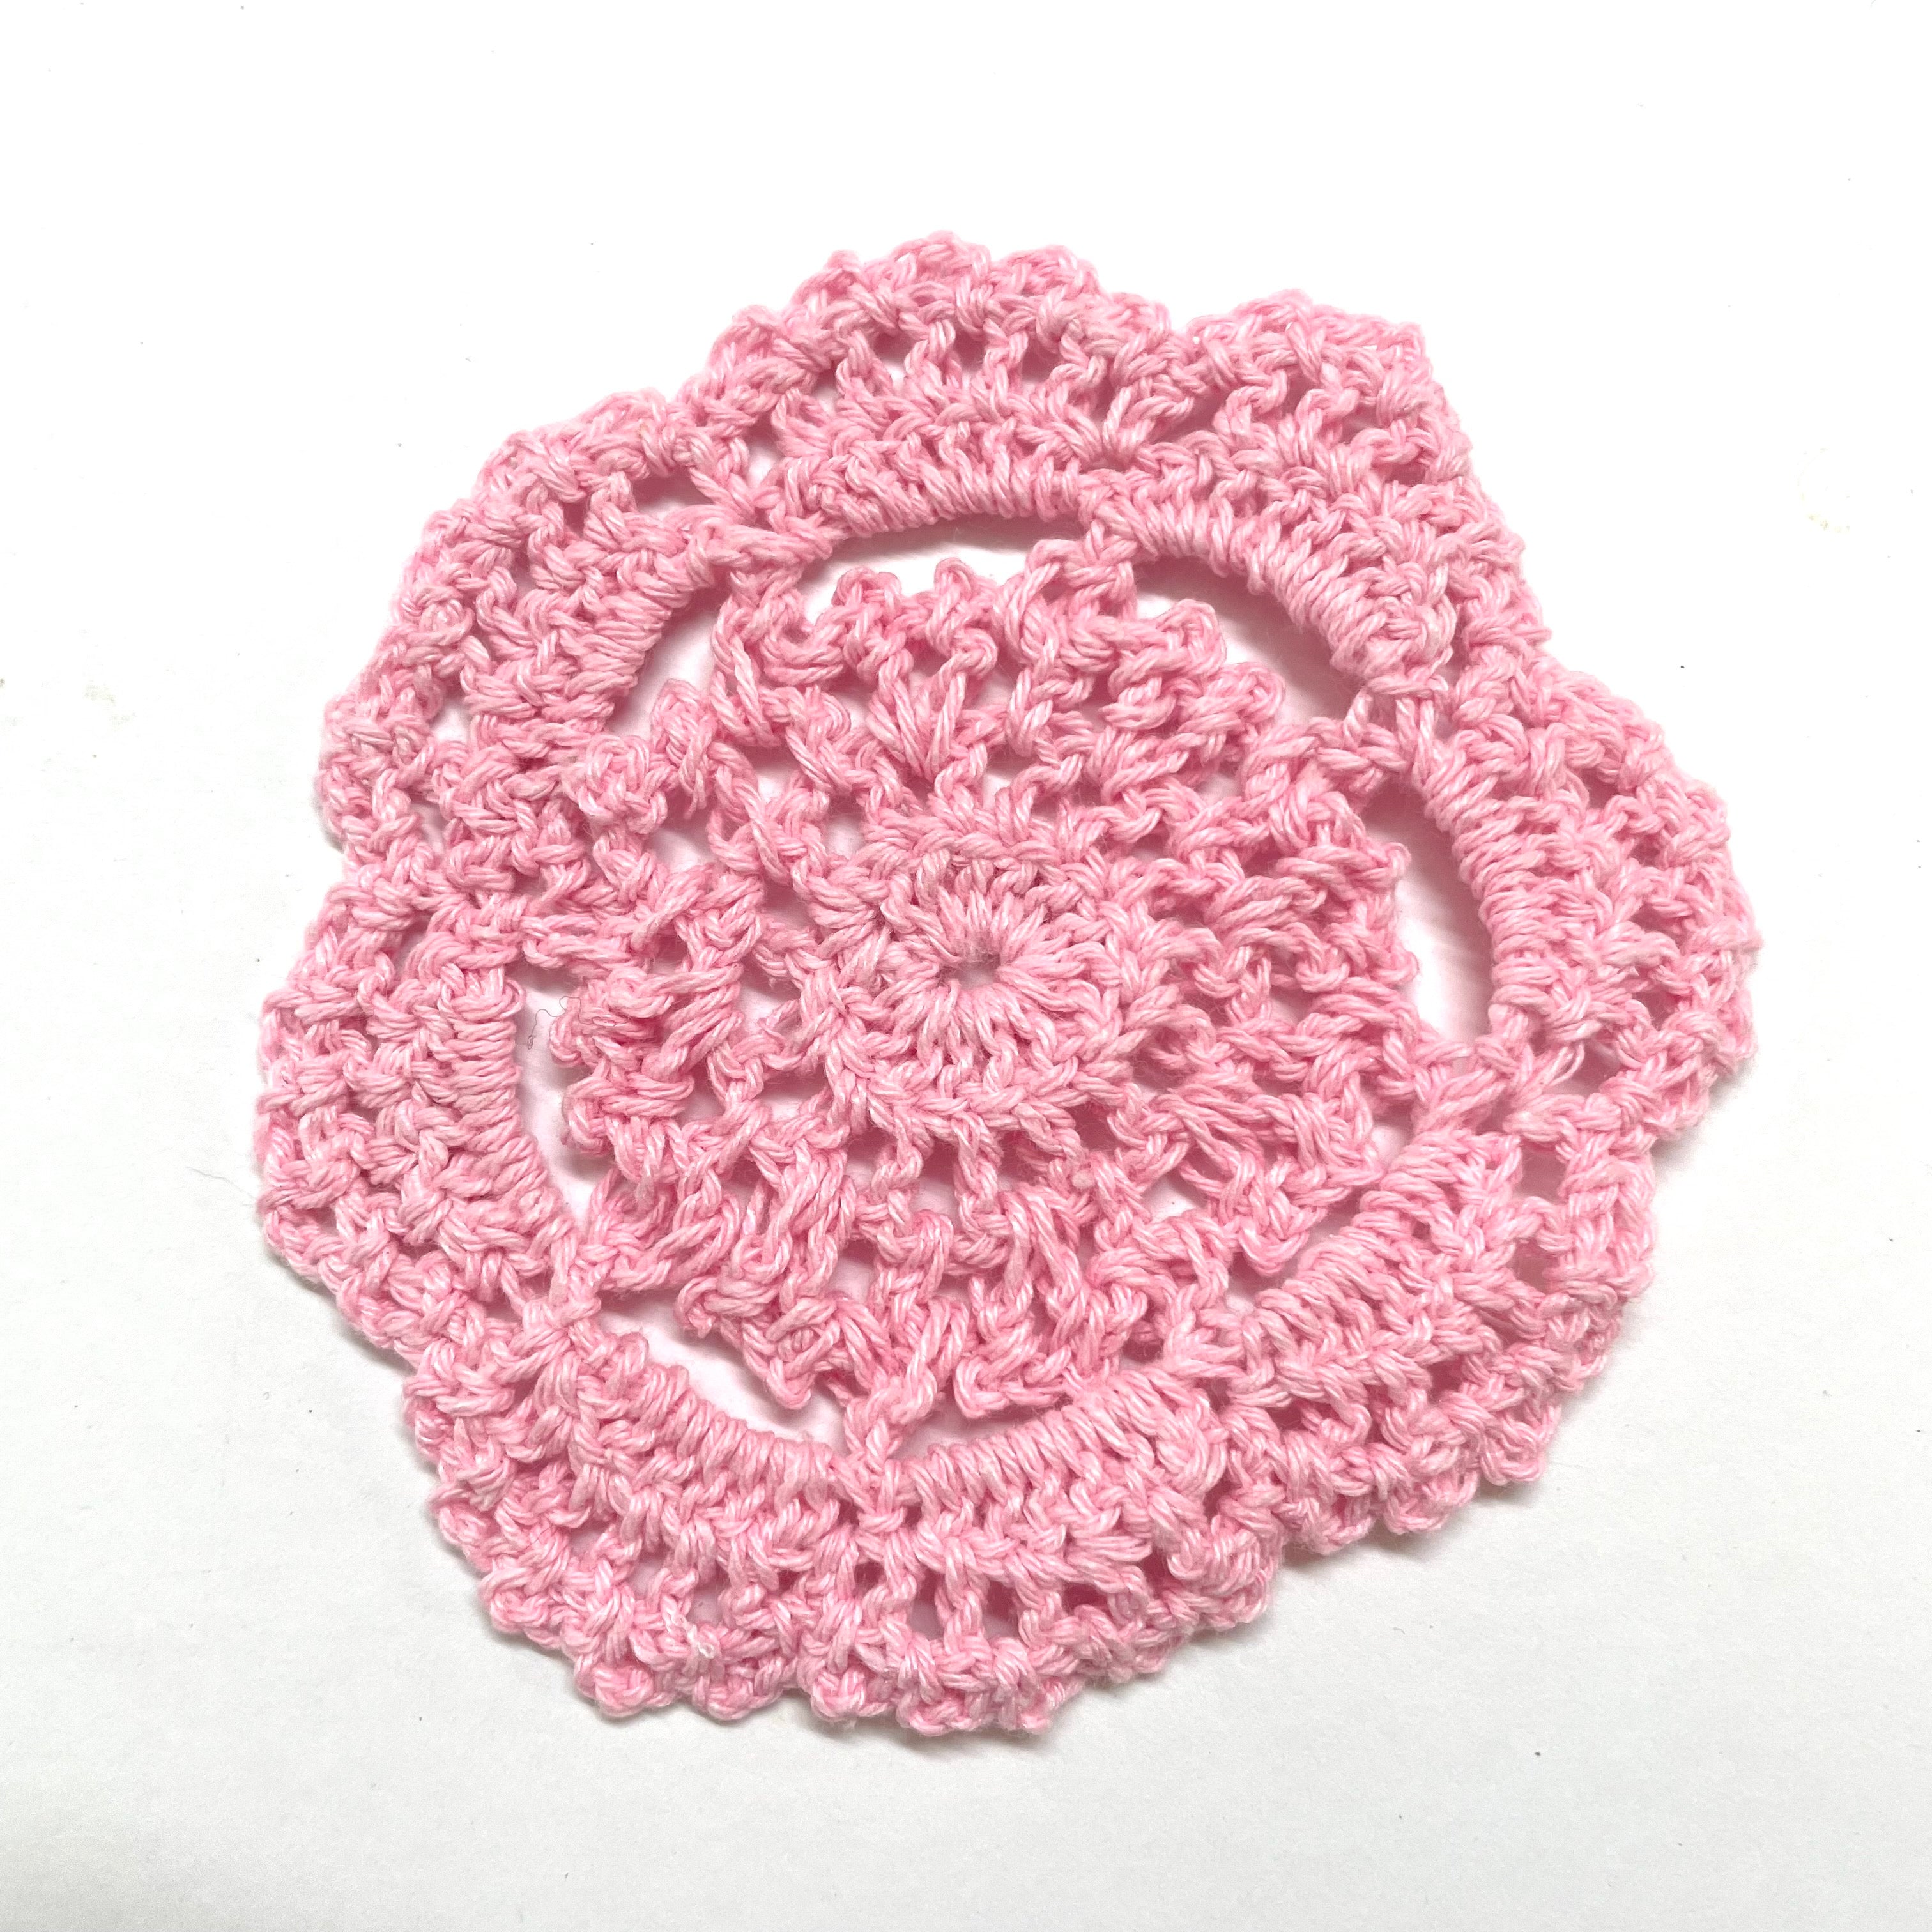 Crochet Cotton Round Doily 10cm - Pink